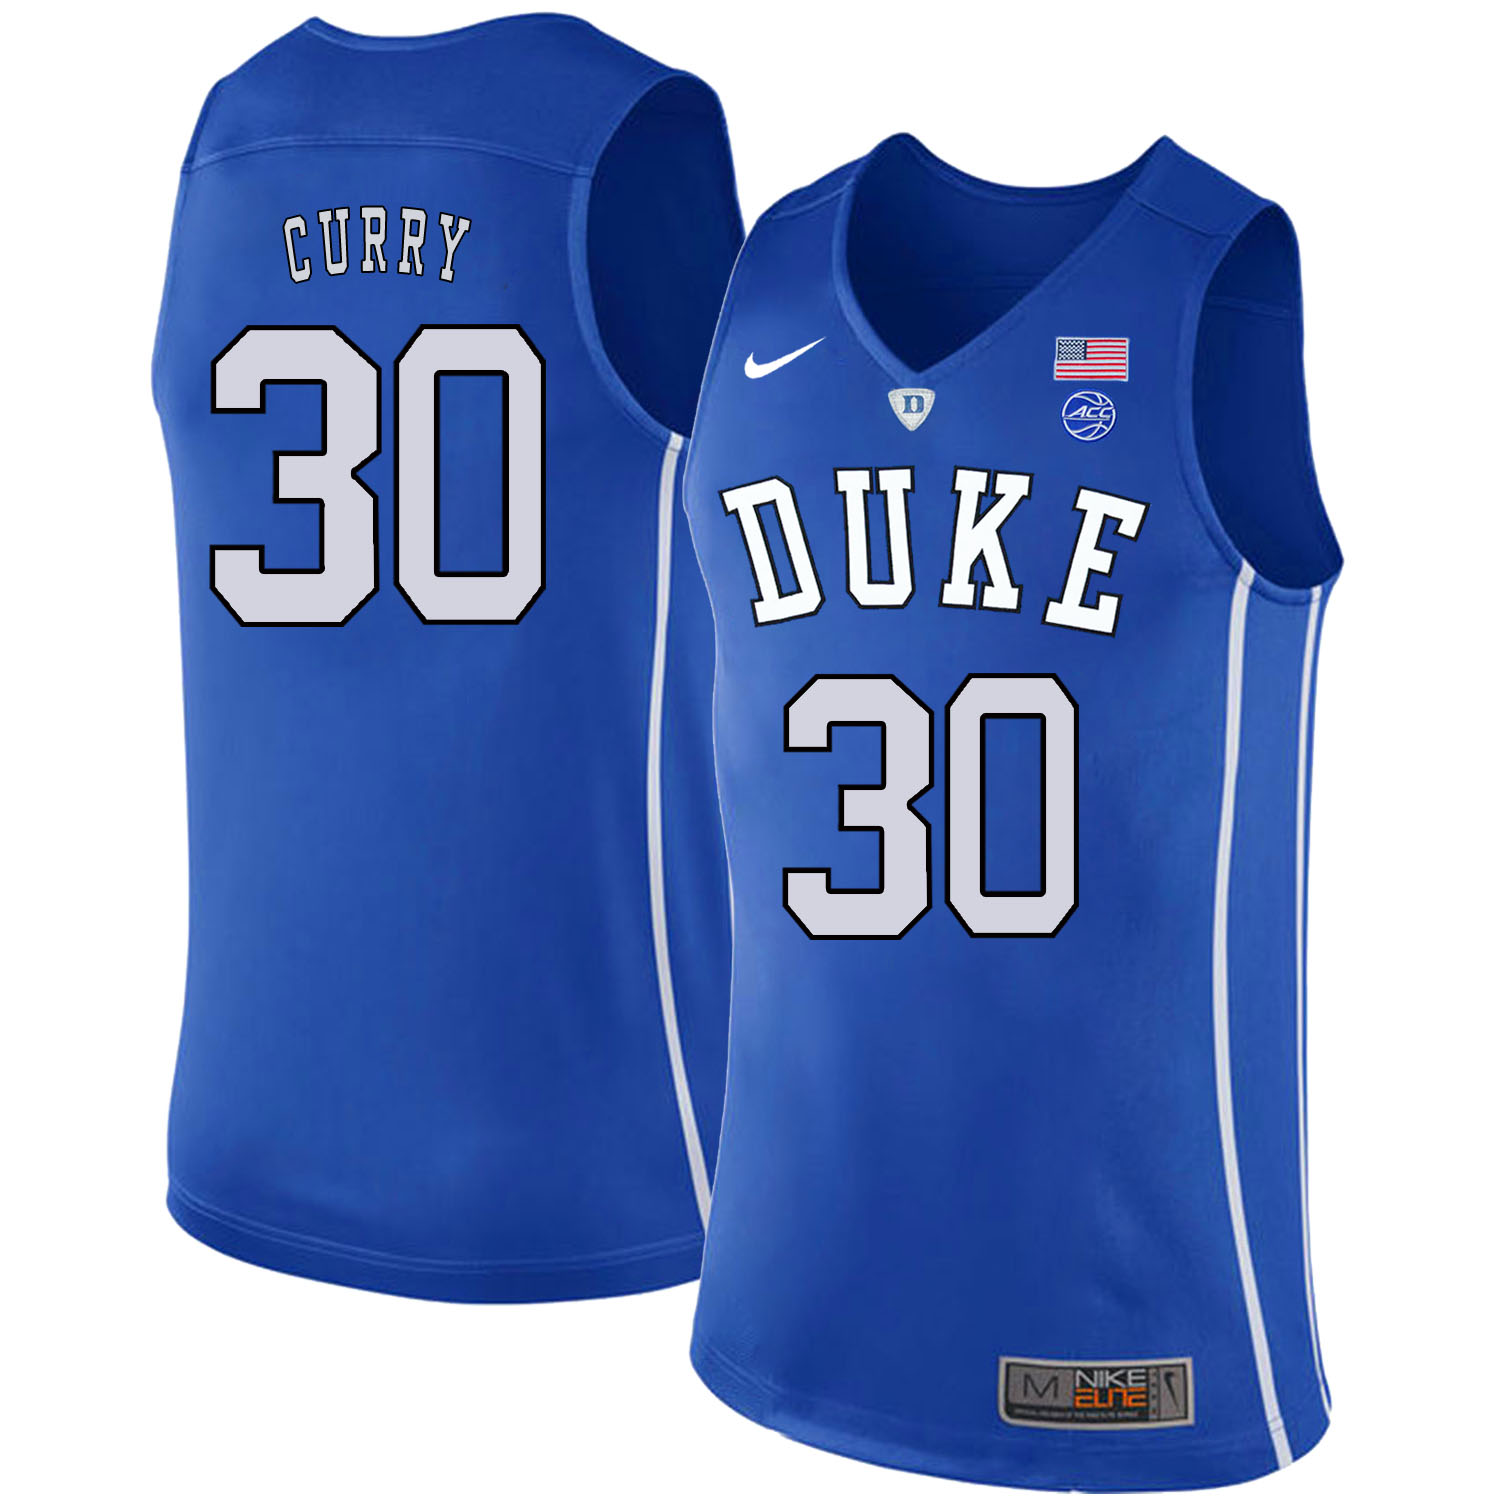 Duke Blue Devils 30 Seth Curry Blue Nike College Basketball Jersey